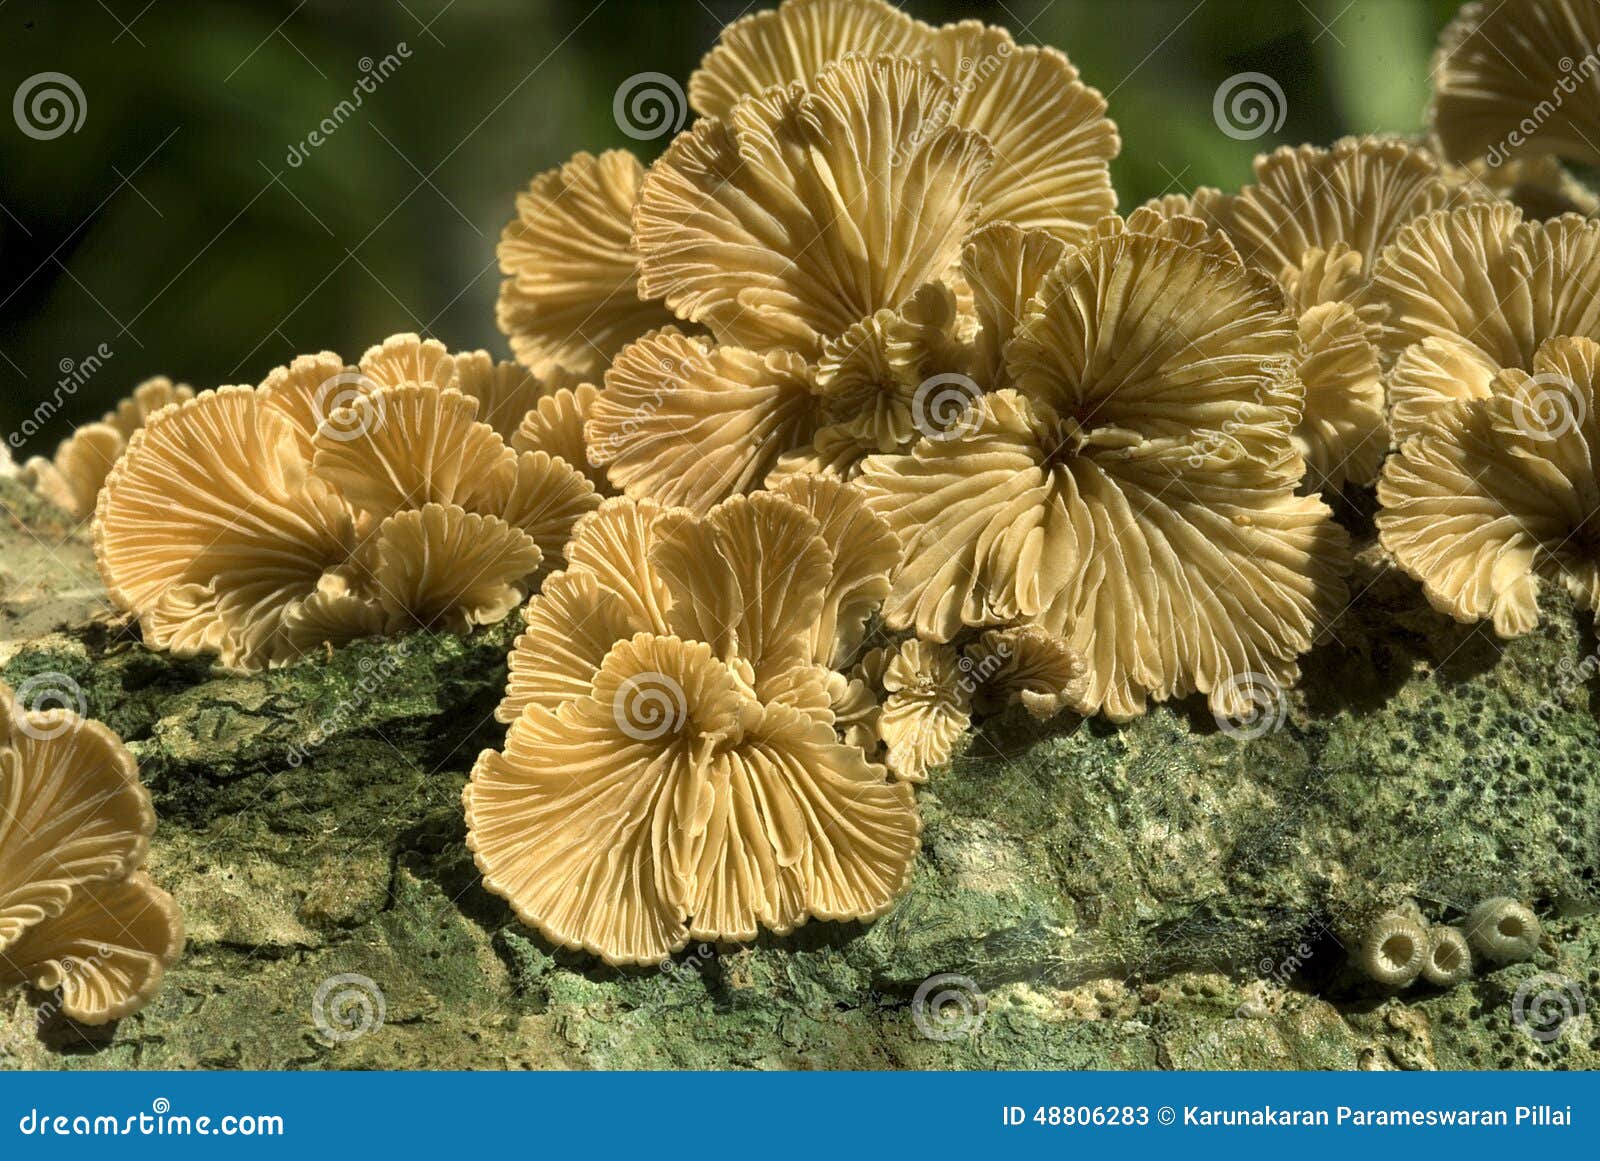 split-gill fungi fruiting on dead wood